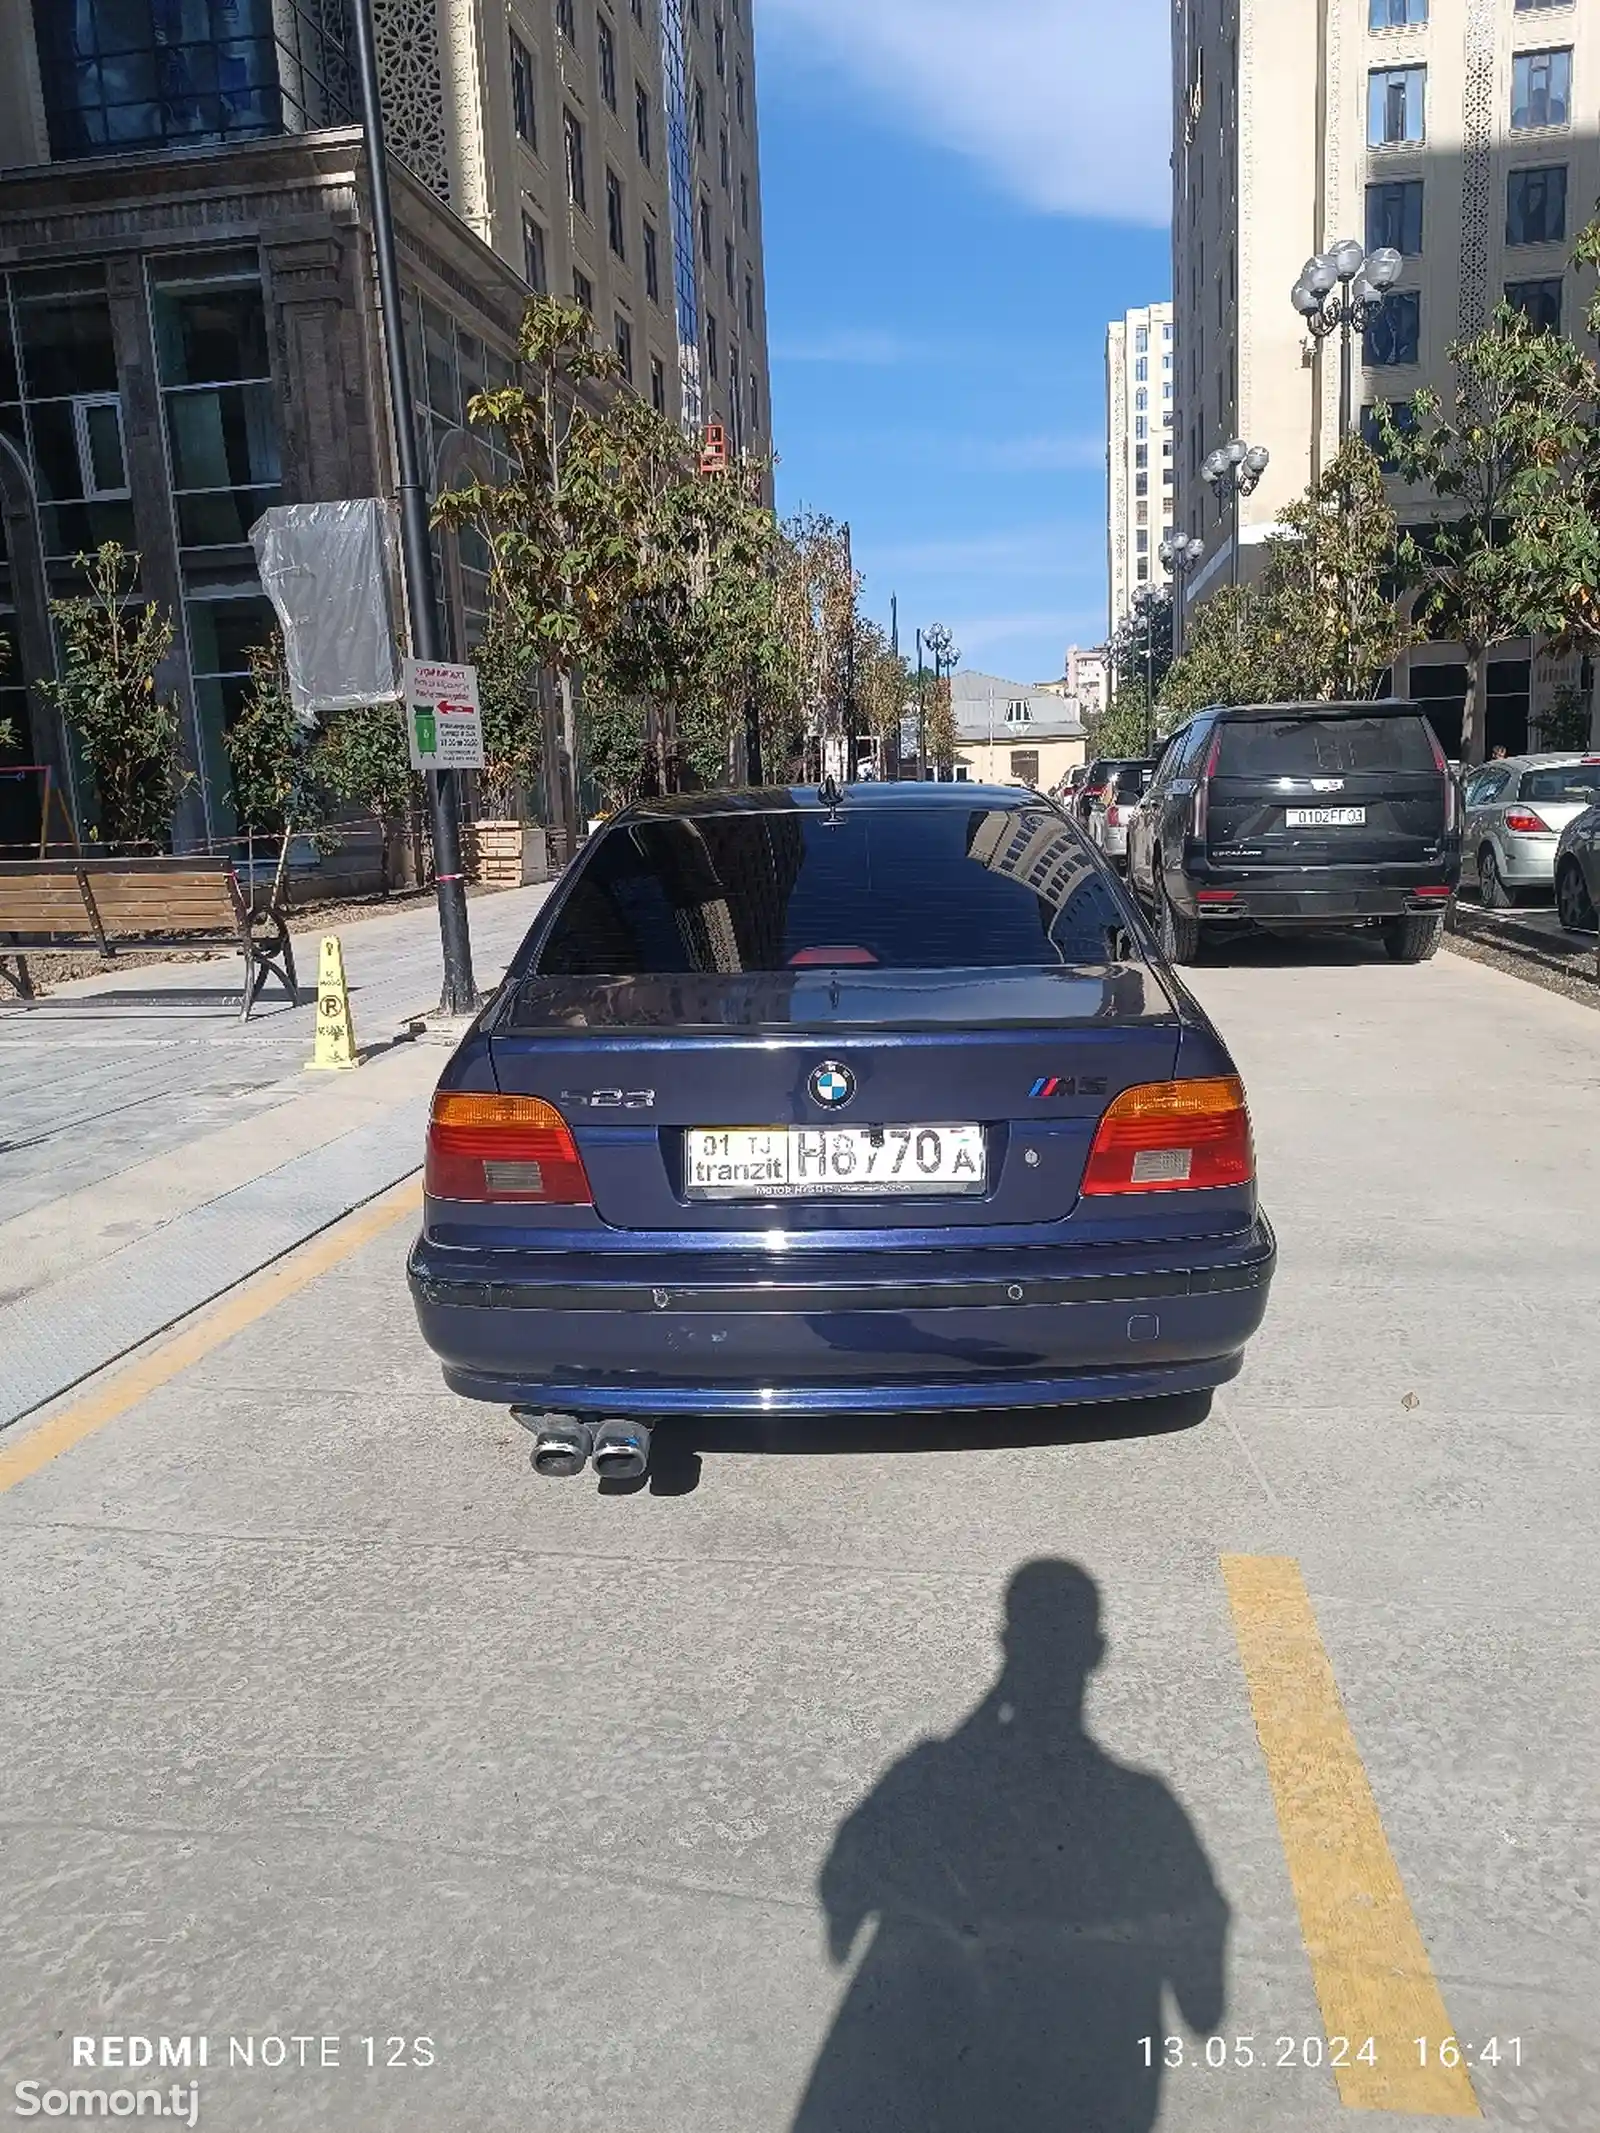 BMW 5 series, 1996-9